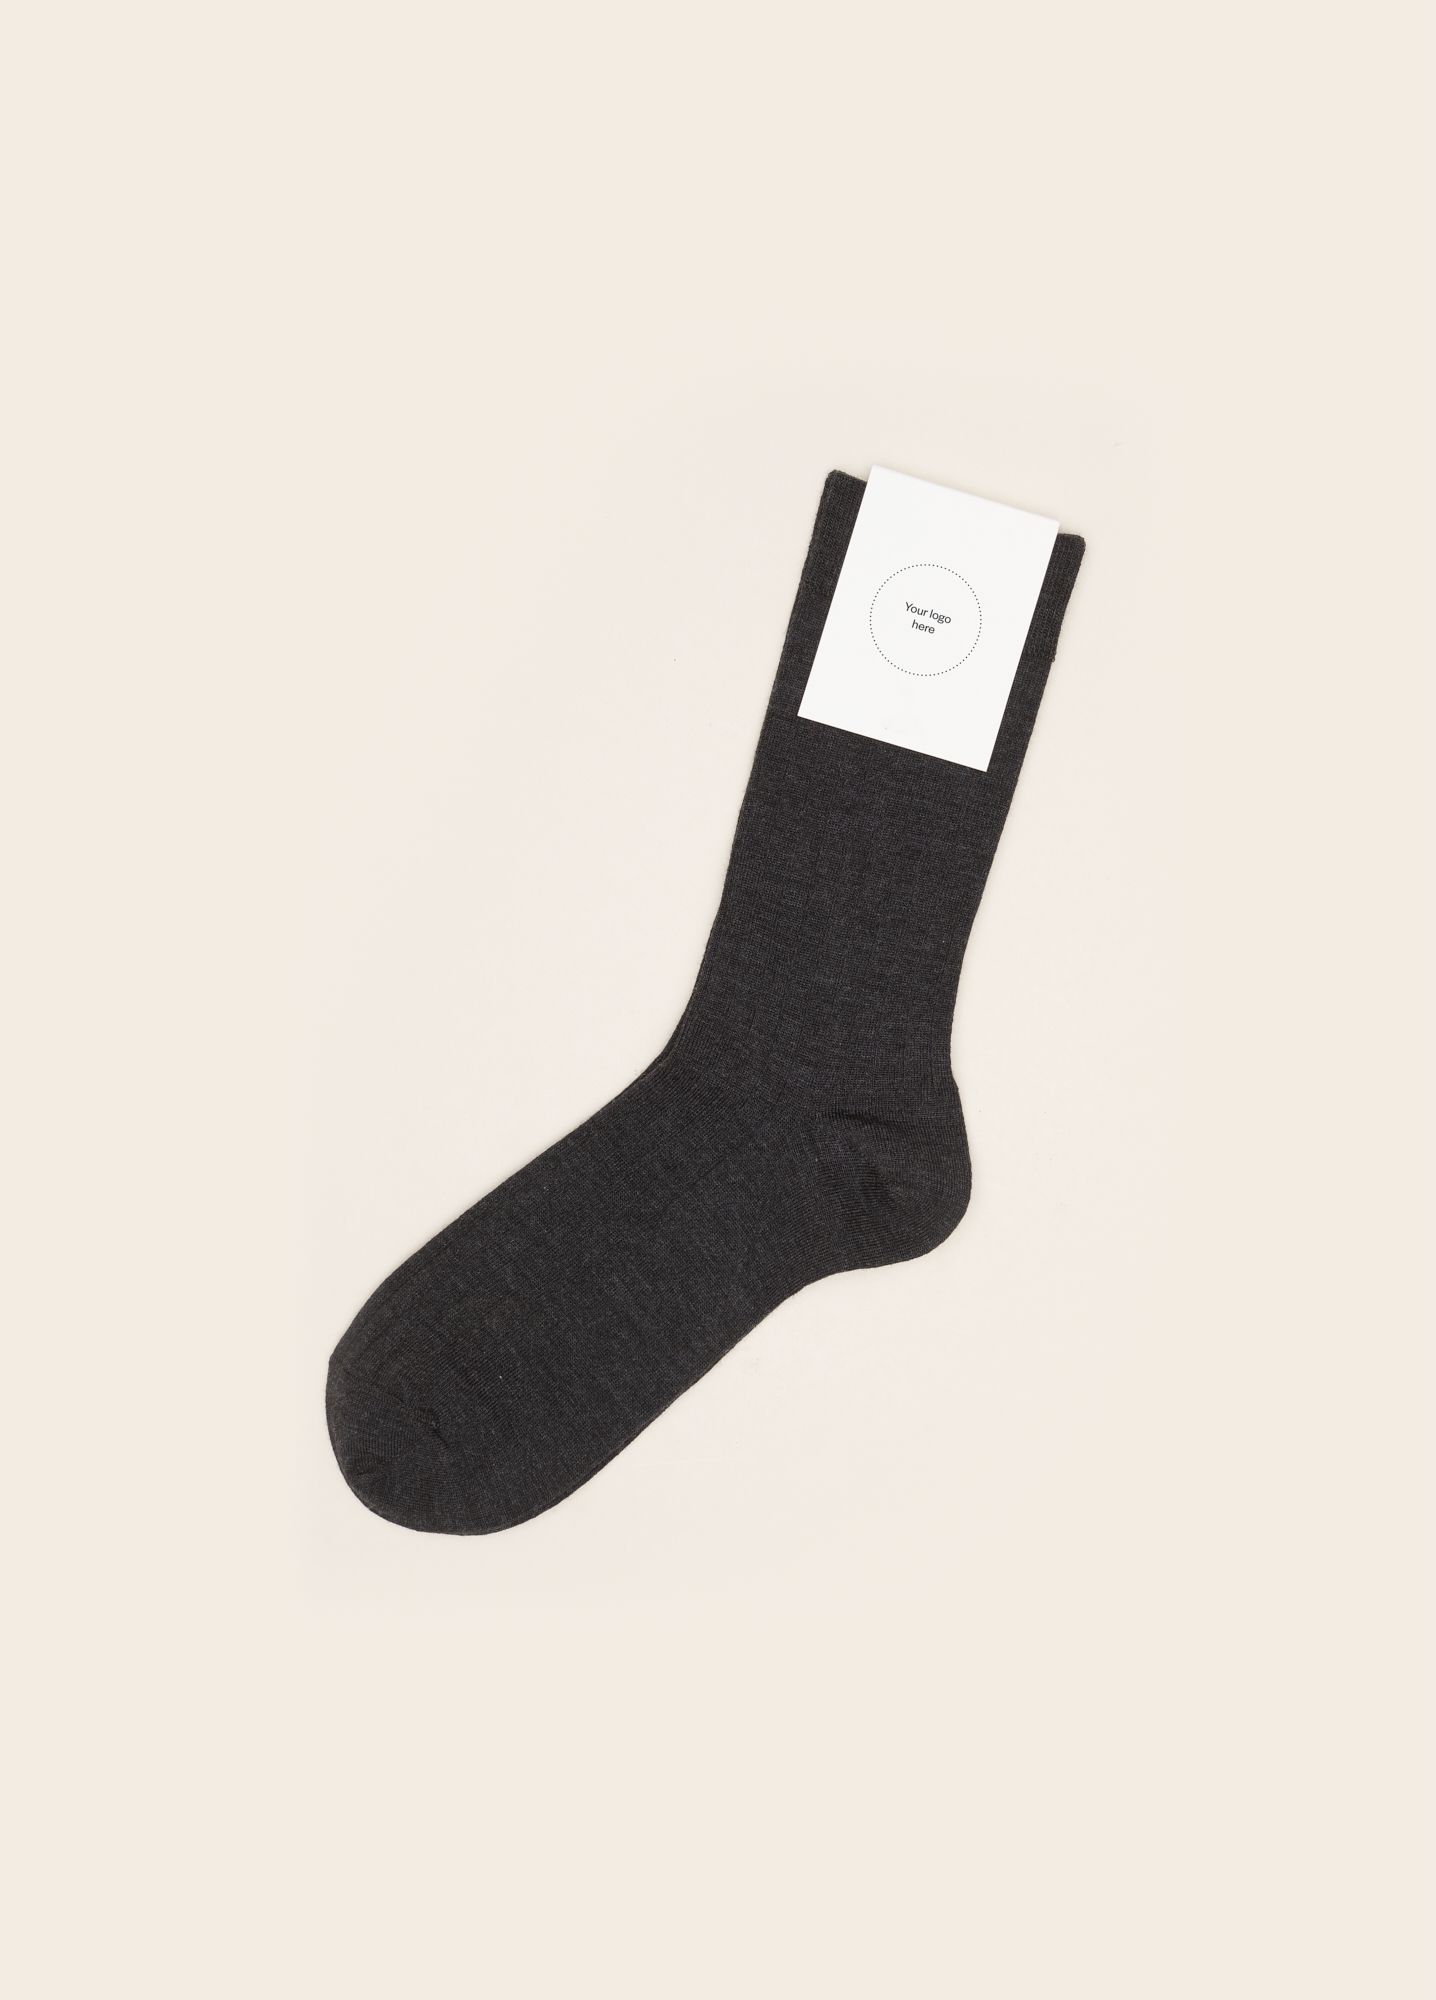 MERCHERY_MAY-2022_Wool socks_with tag.jpg